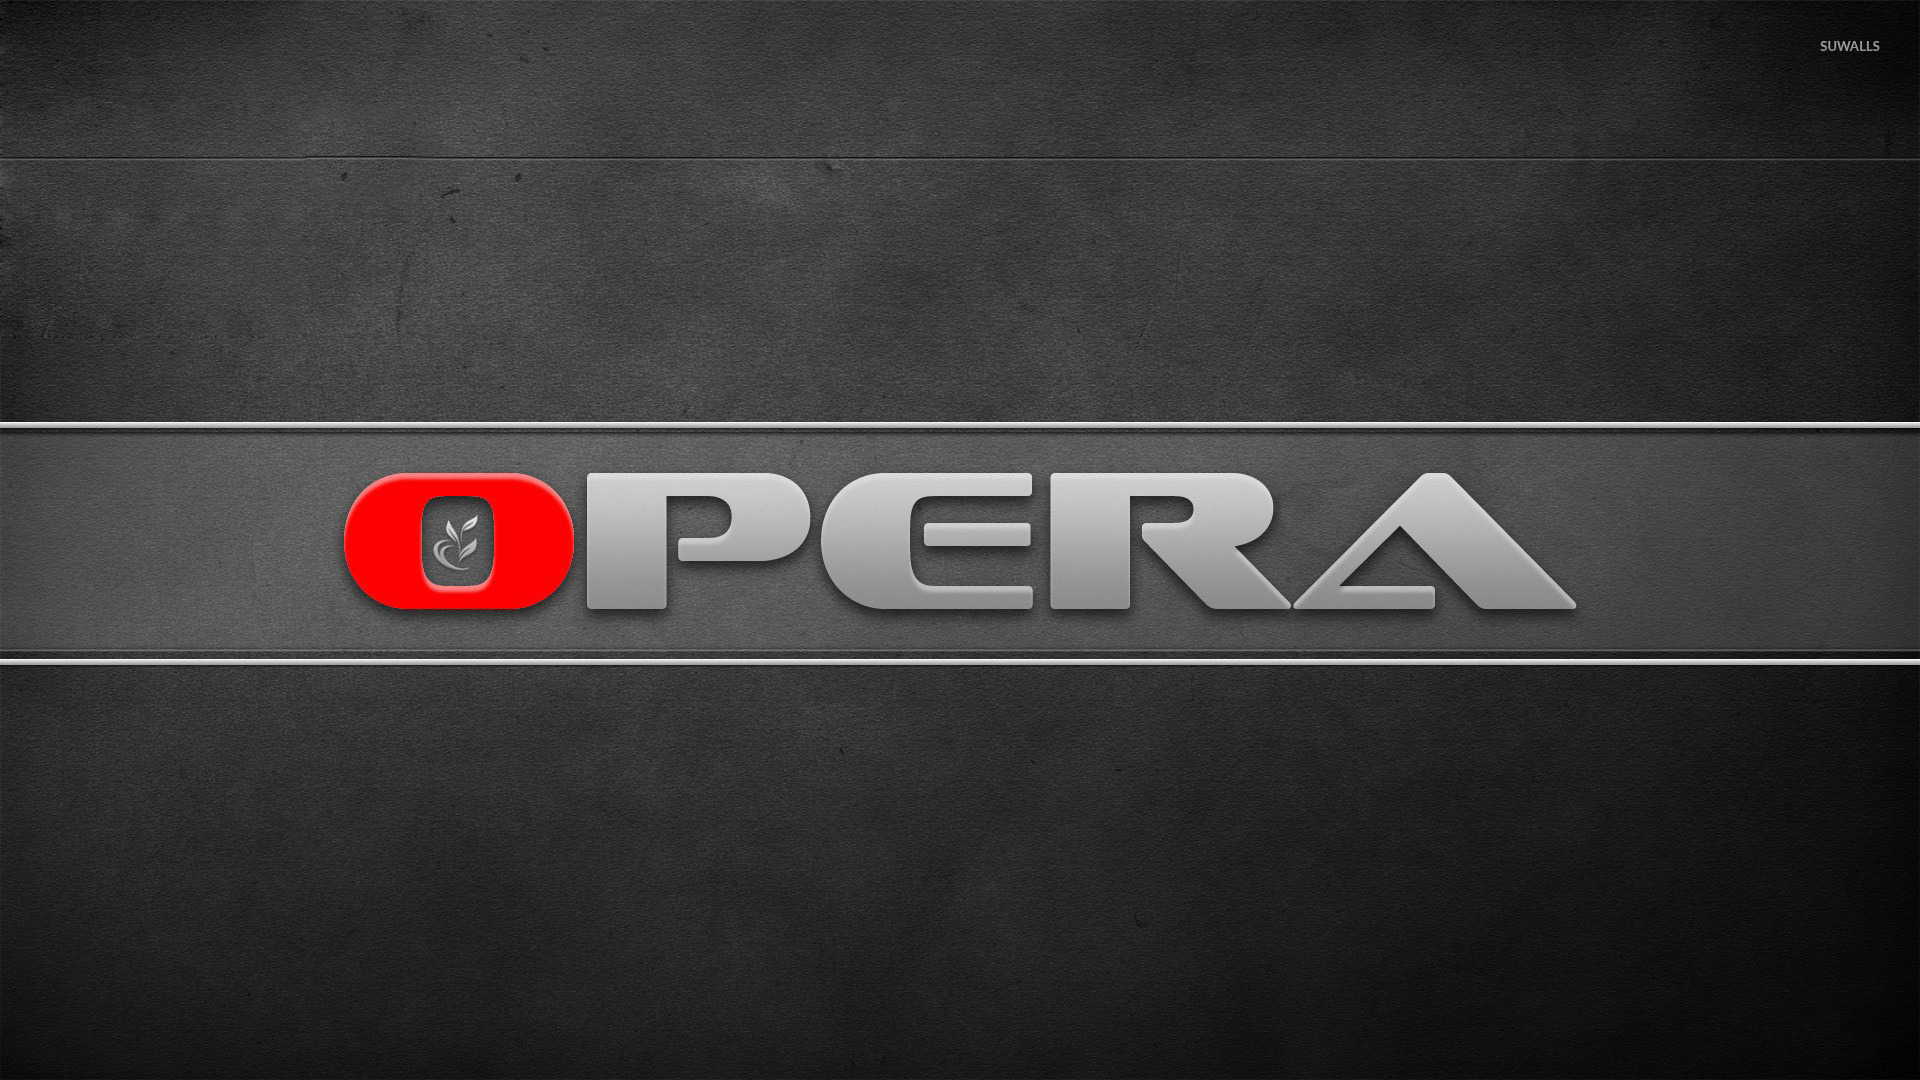 Opera Browser Wallpaper 1080p - HD Wallpaper 